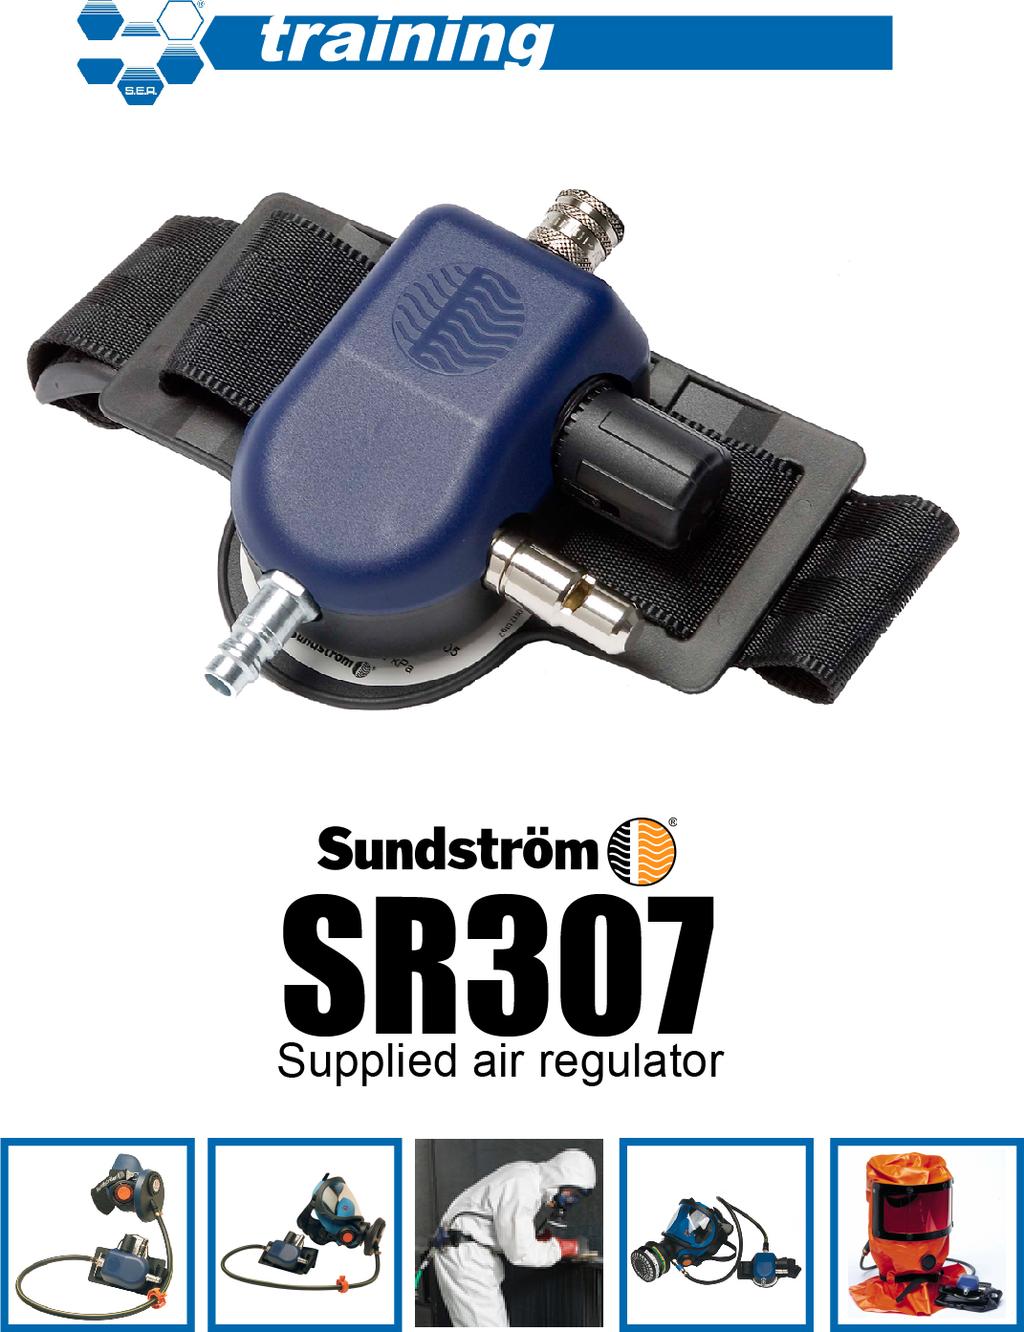 SR307 supplied air regulator